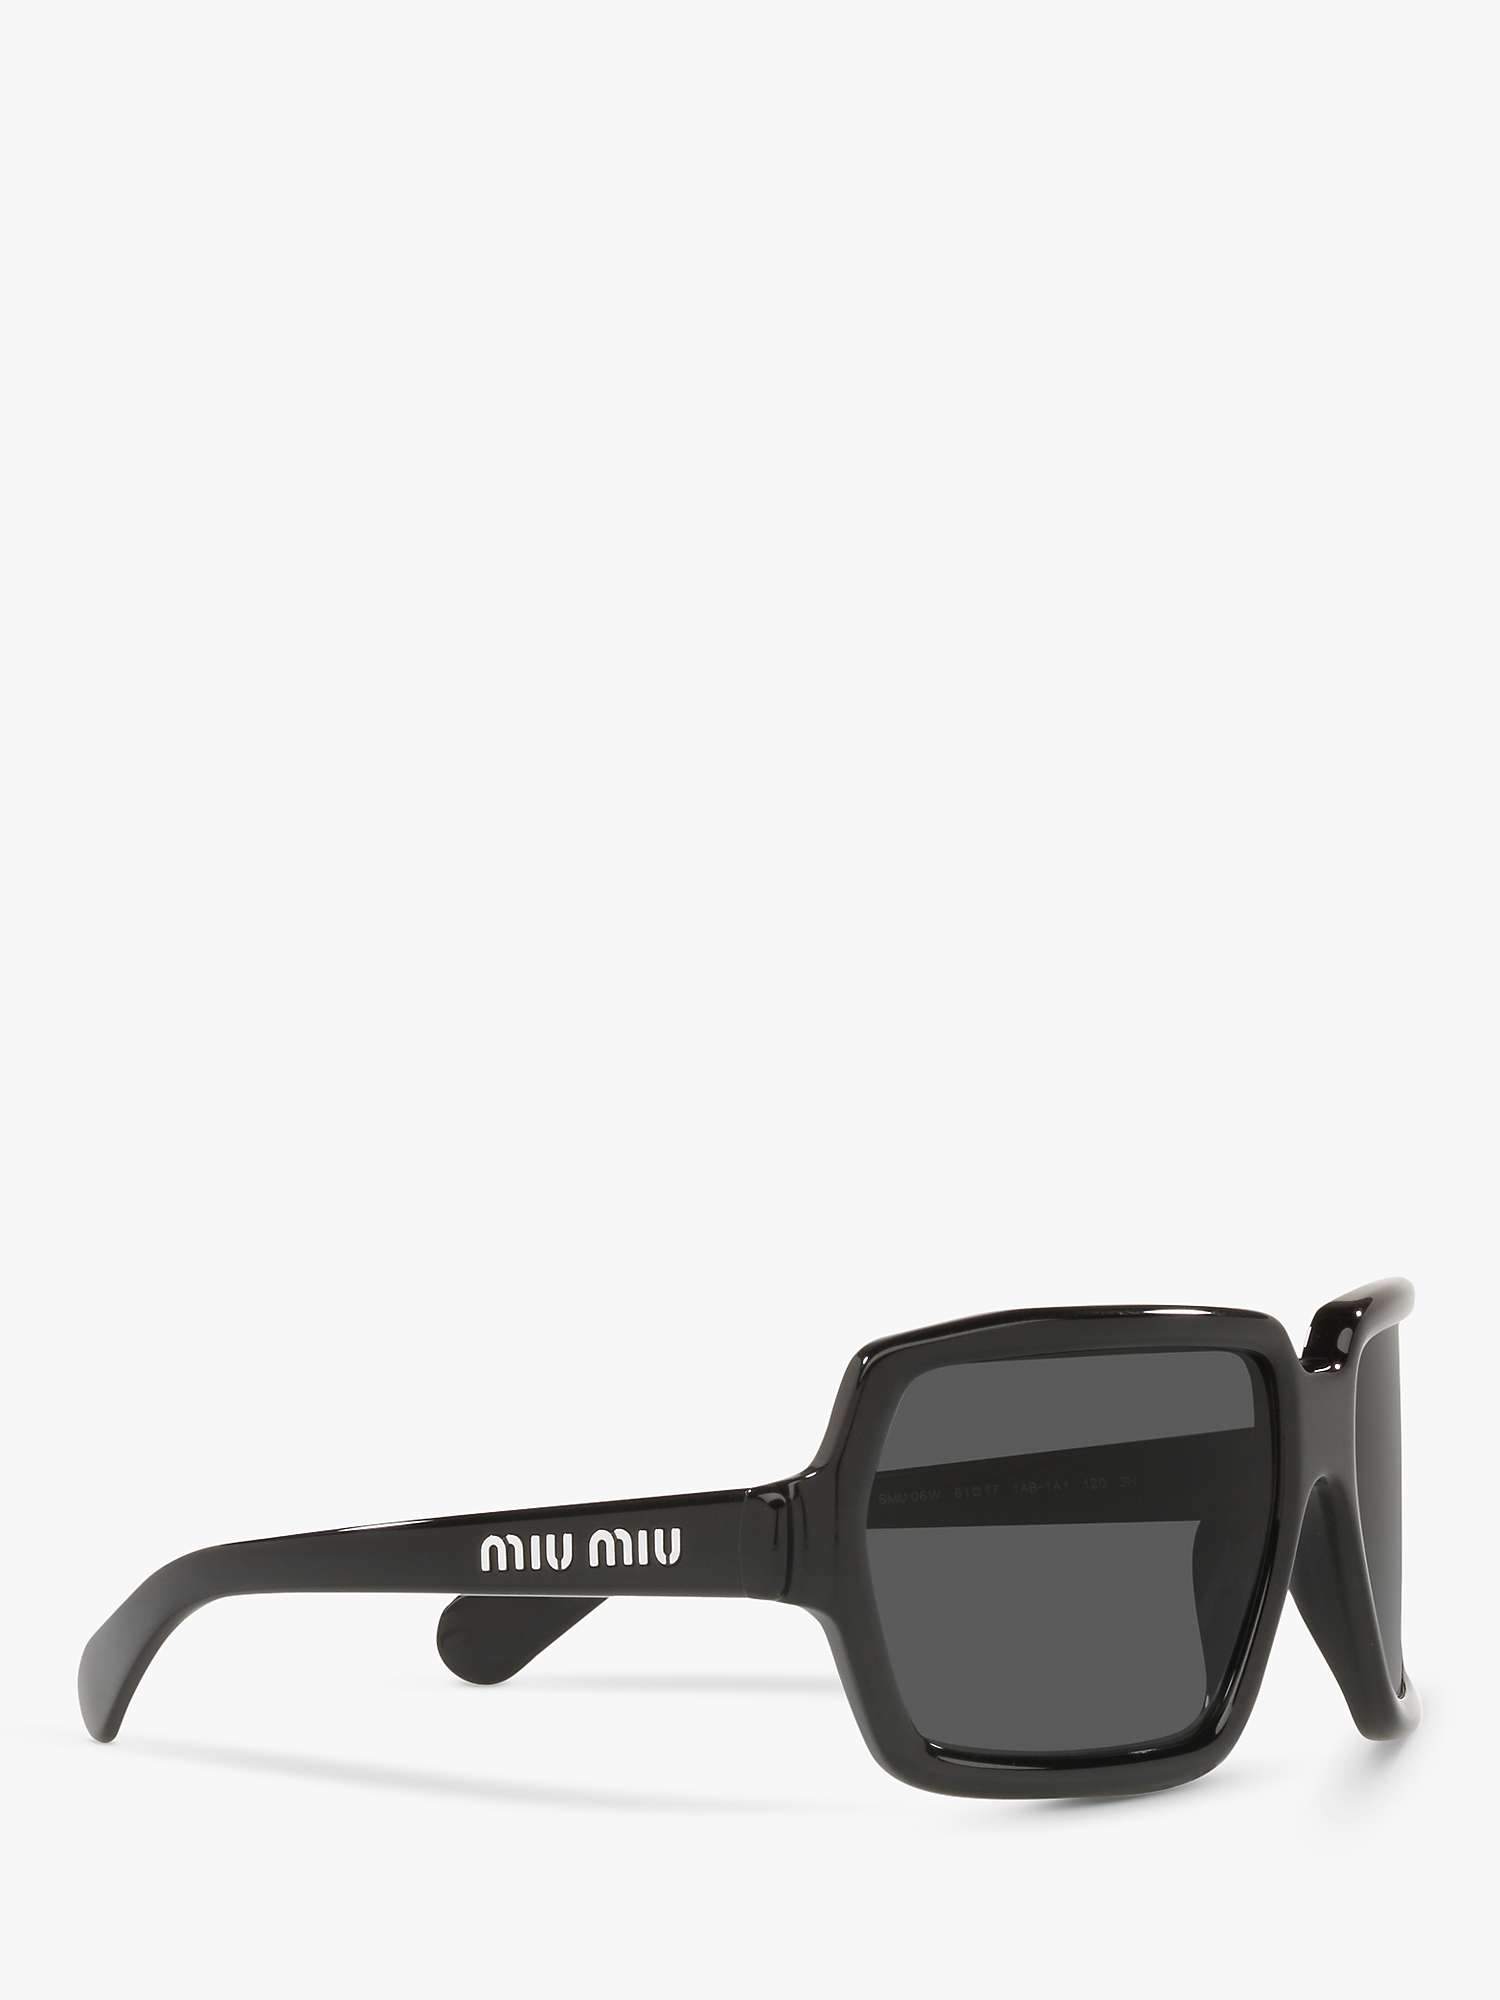 Buy Miu Miu MU 06WS Women's Irregular Sunglasses, Black/Grey Online at johnlewis.com